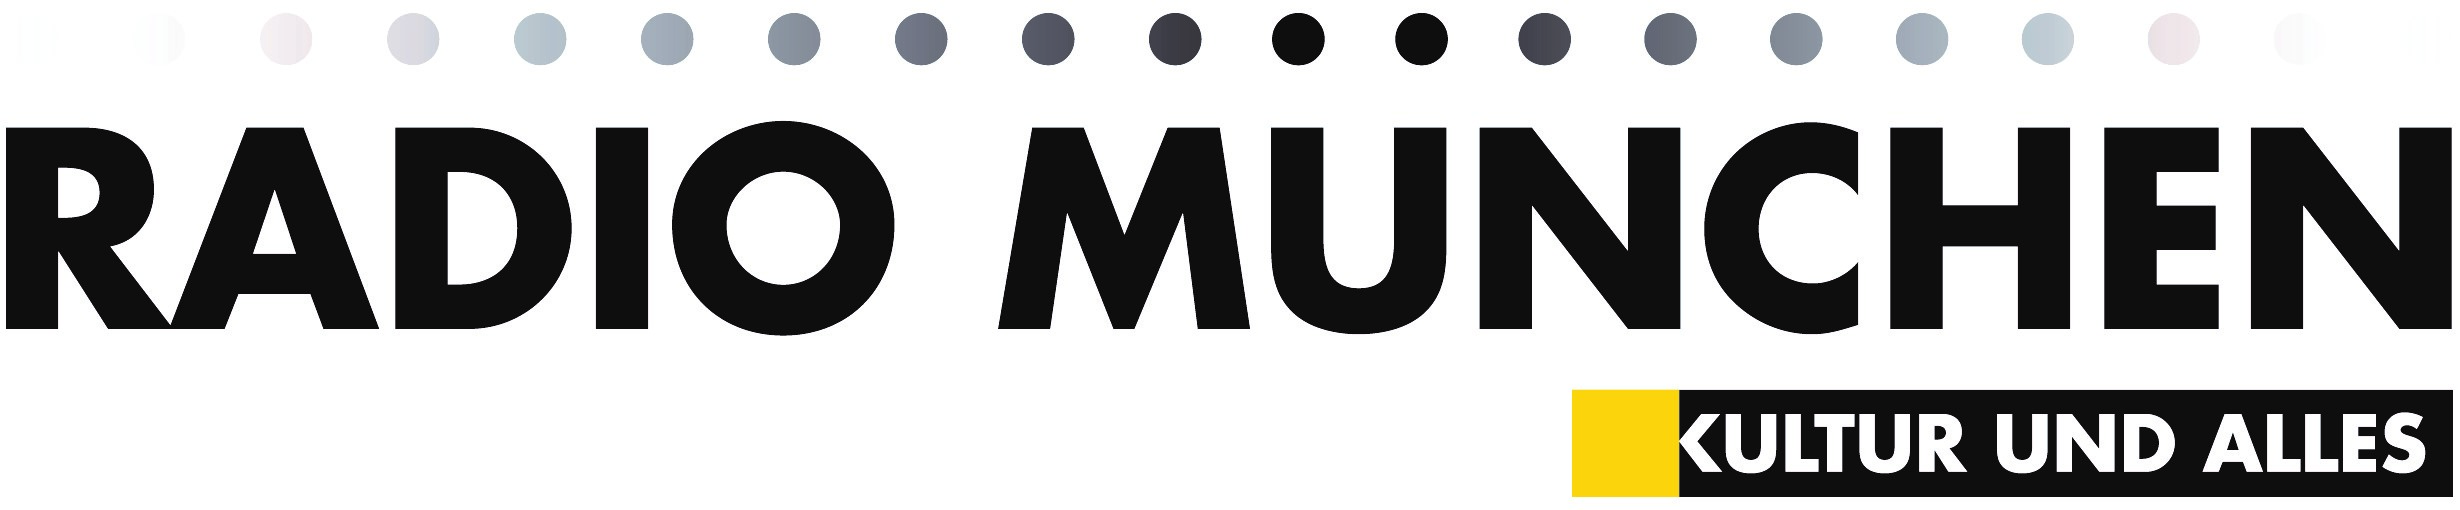 Radio München Logo